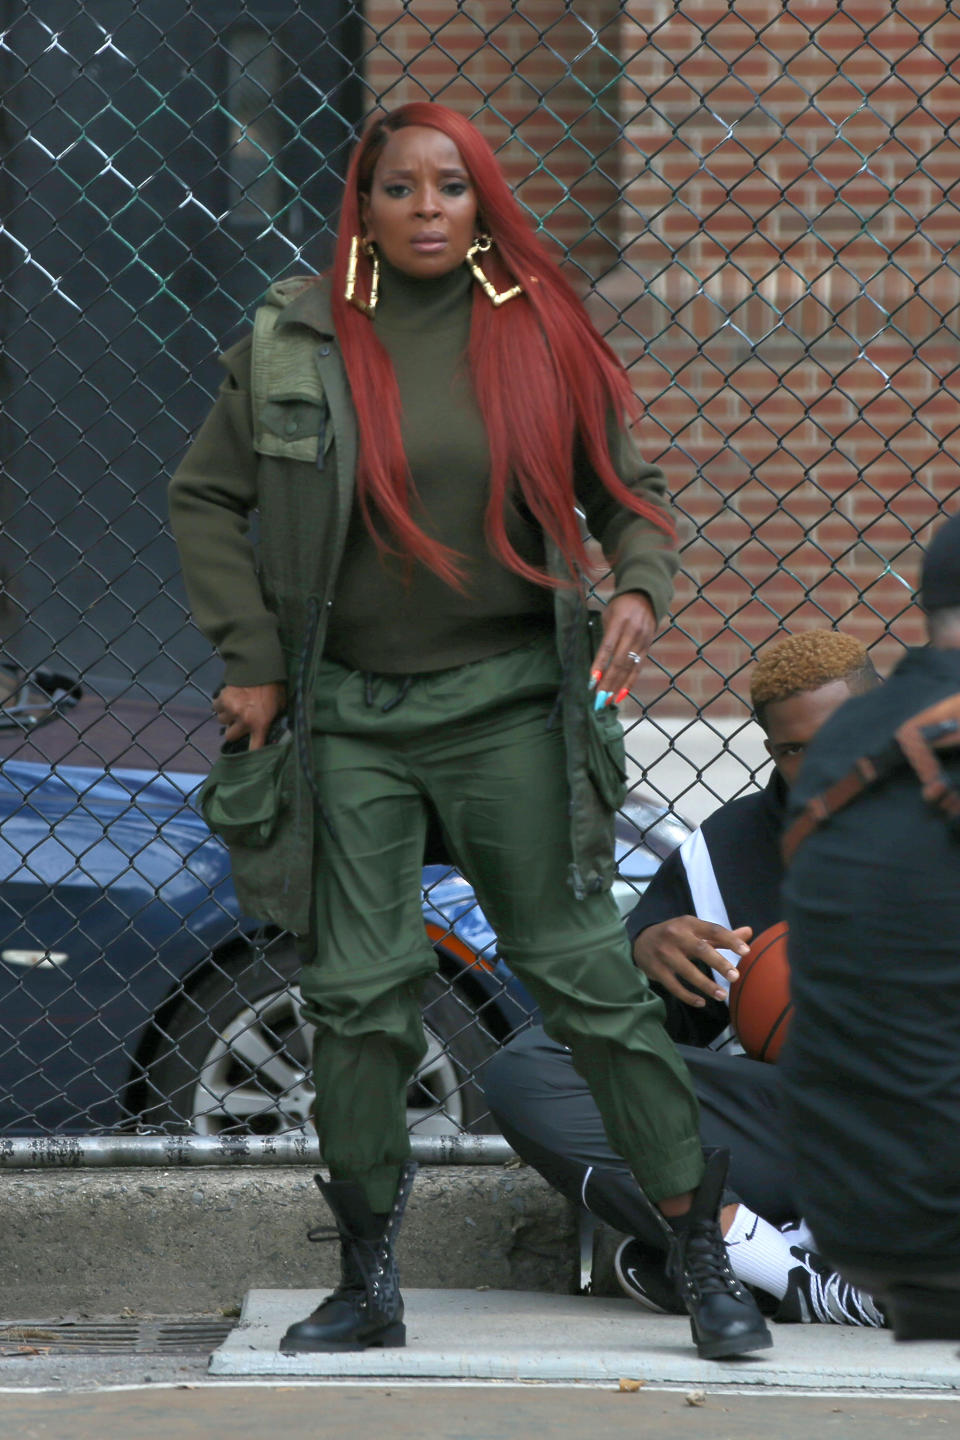 Mary J. Blige films “Power Book II: Ghost” in New York City. - Credit: Christopher Peterson / SplashNews.com